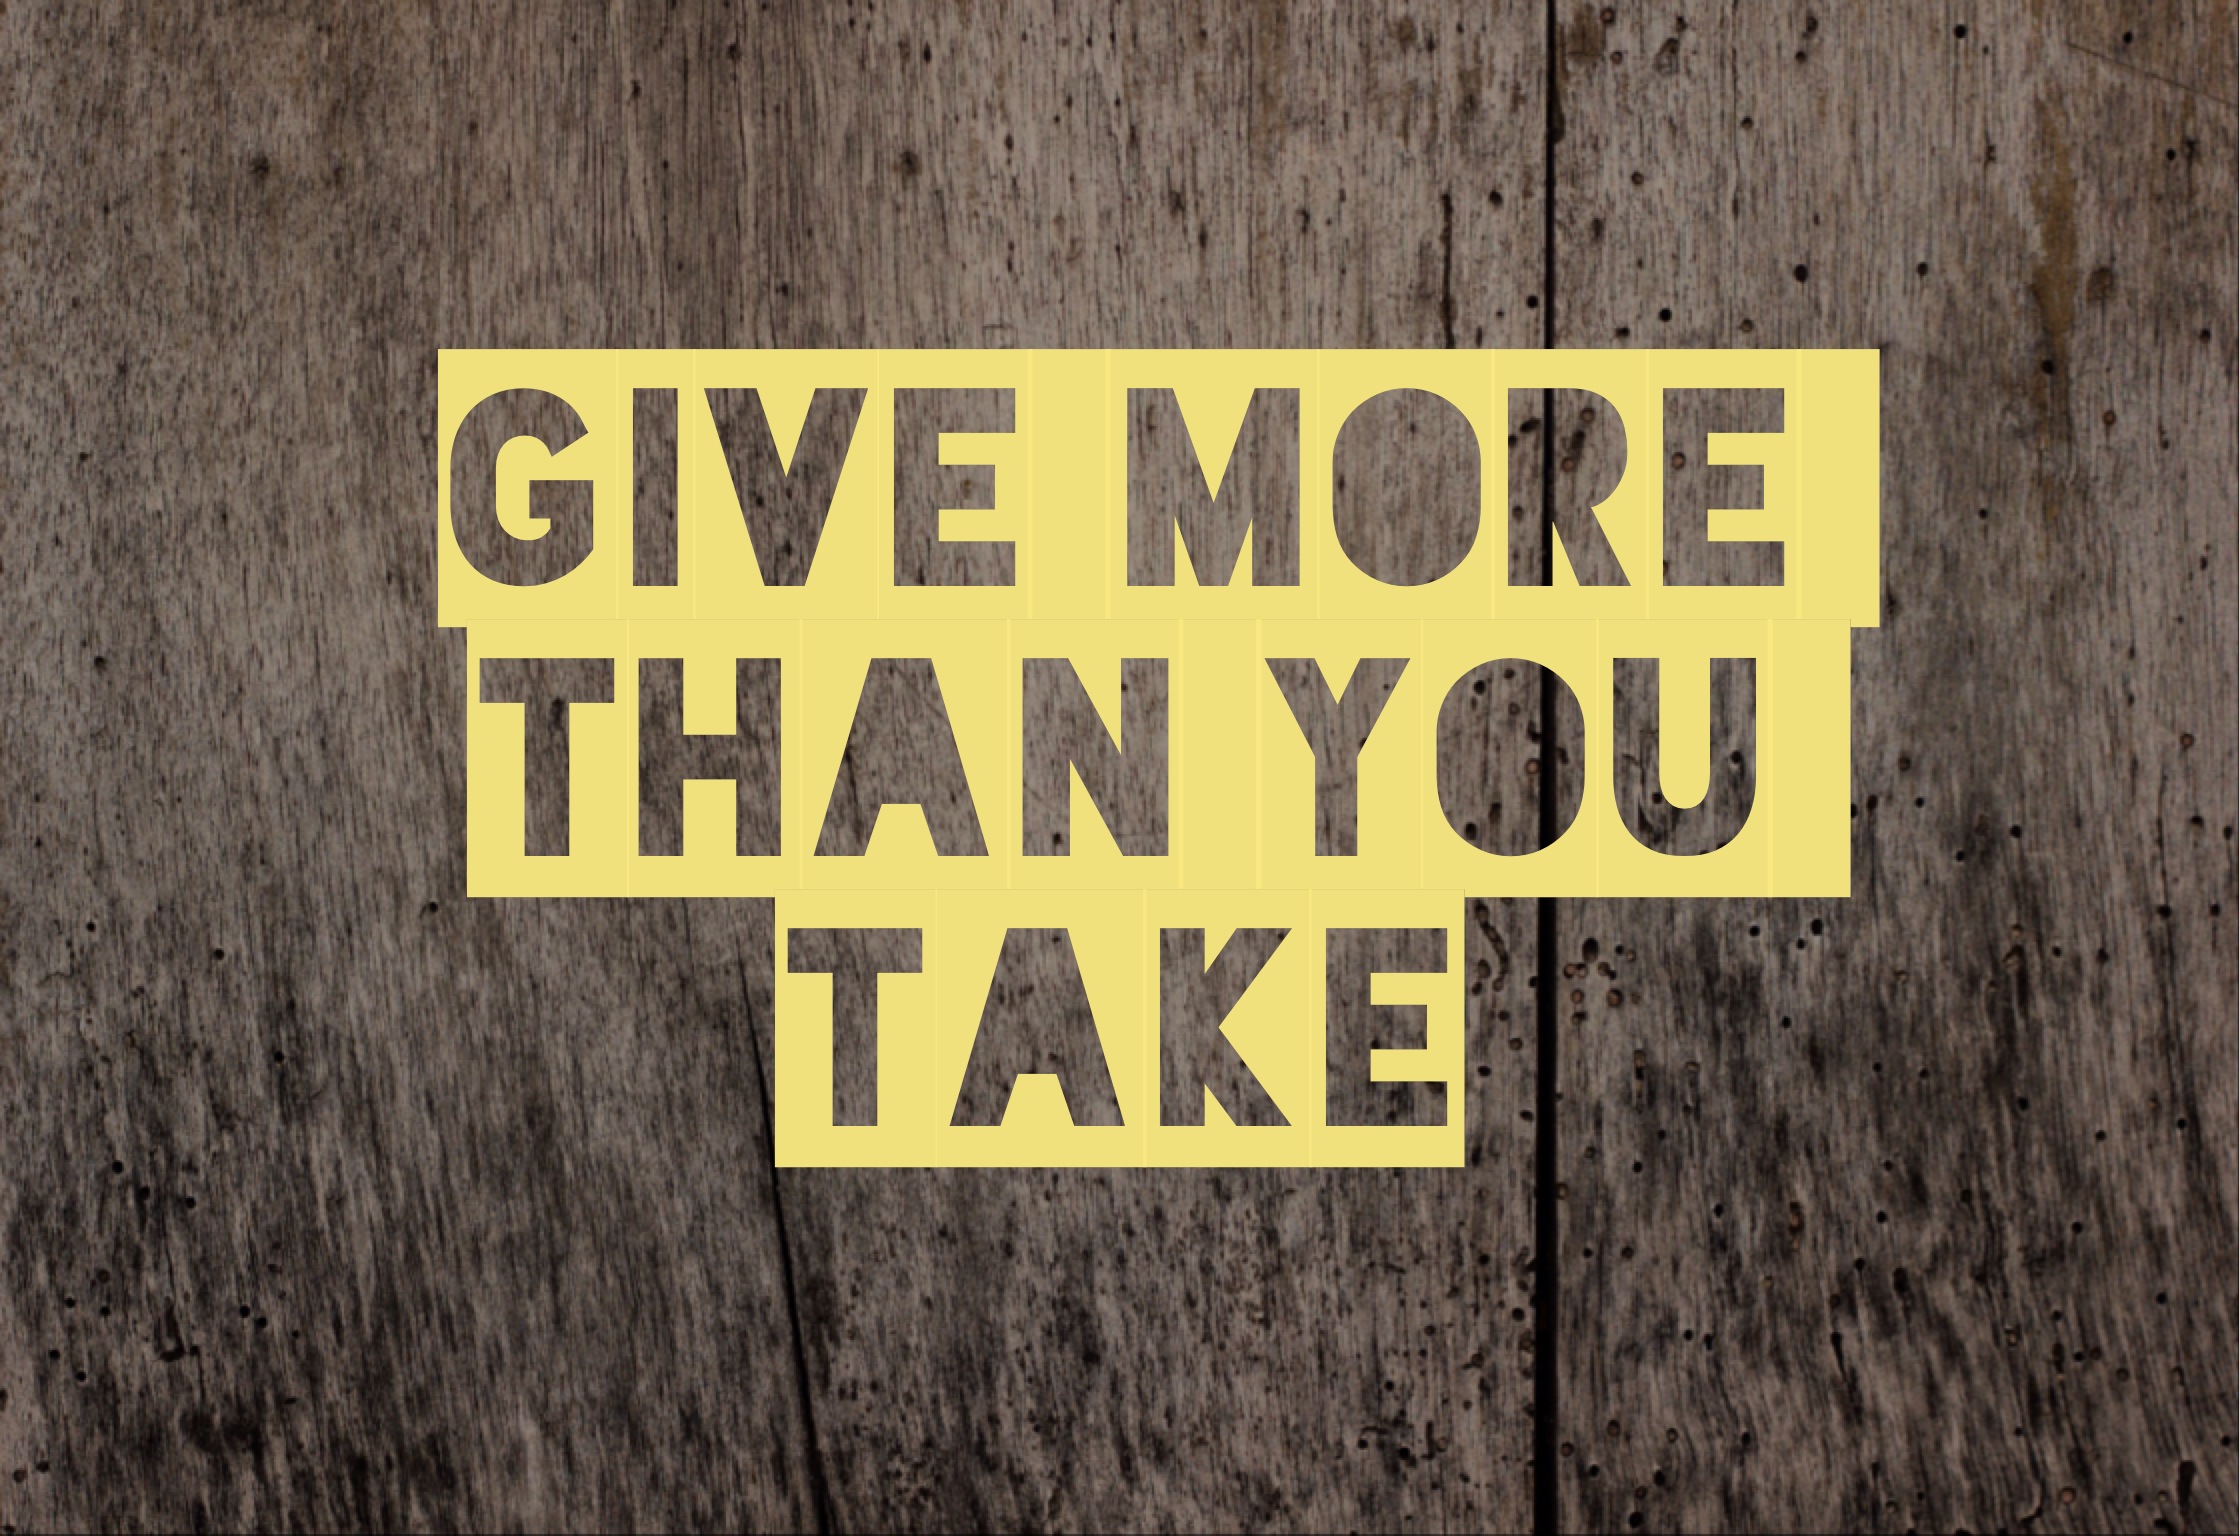 Give more than you take